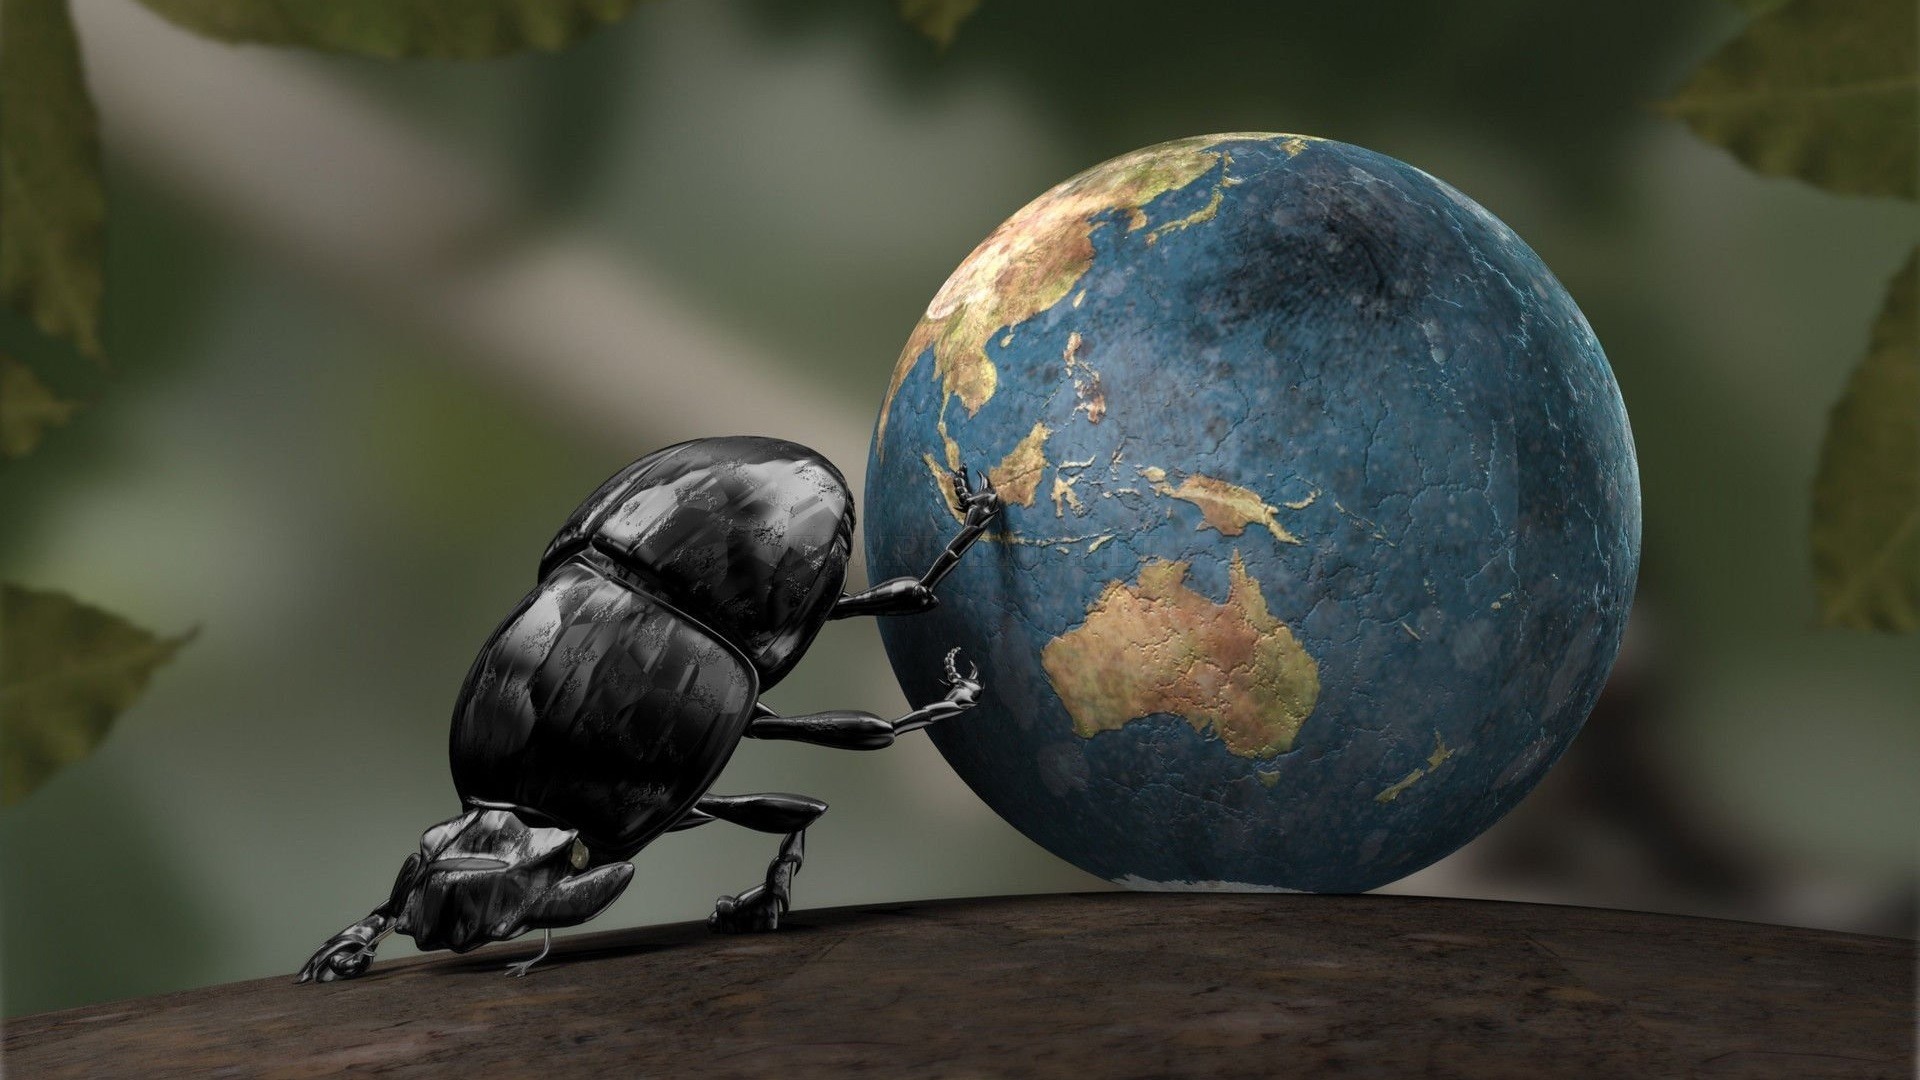 General 1920x1080 Earth insect CGI animals digital art